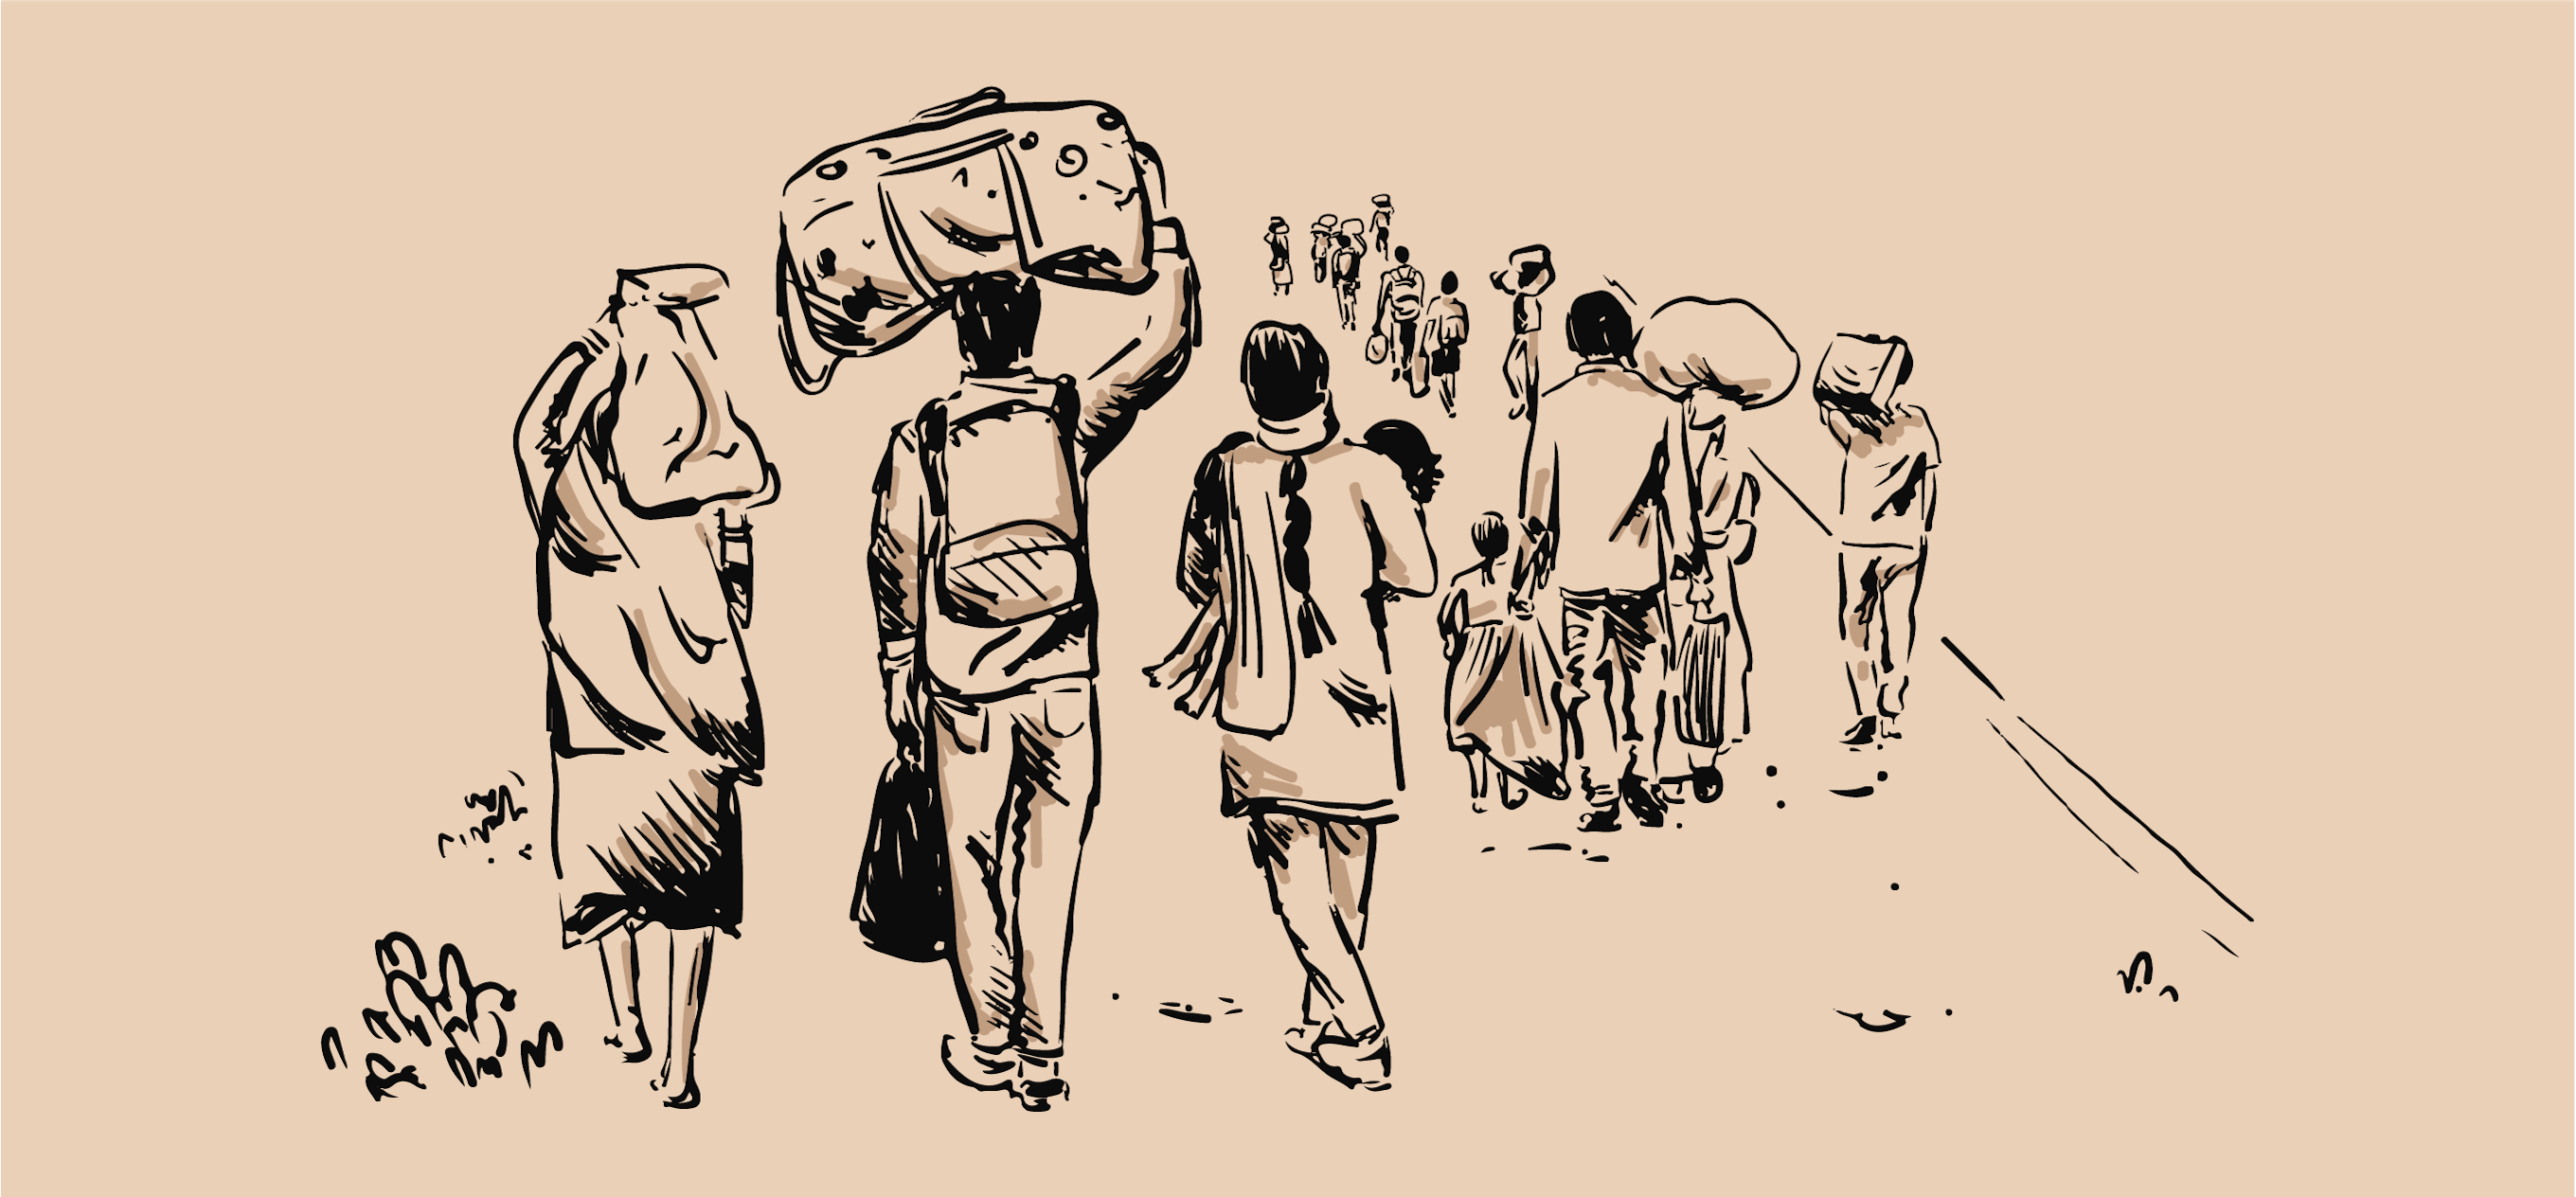 Famished by Mridula Chari; Illustration by Akshaya Zachariah on FiftyTwo.in